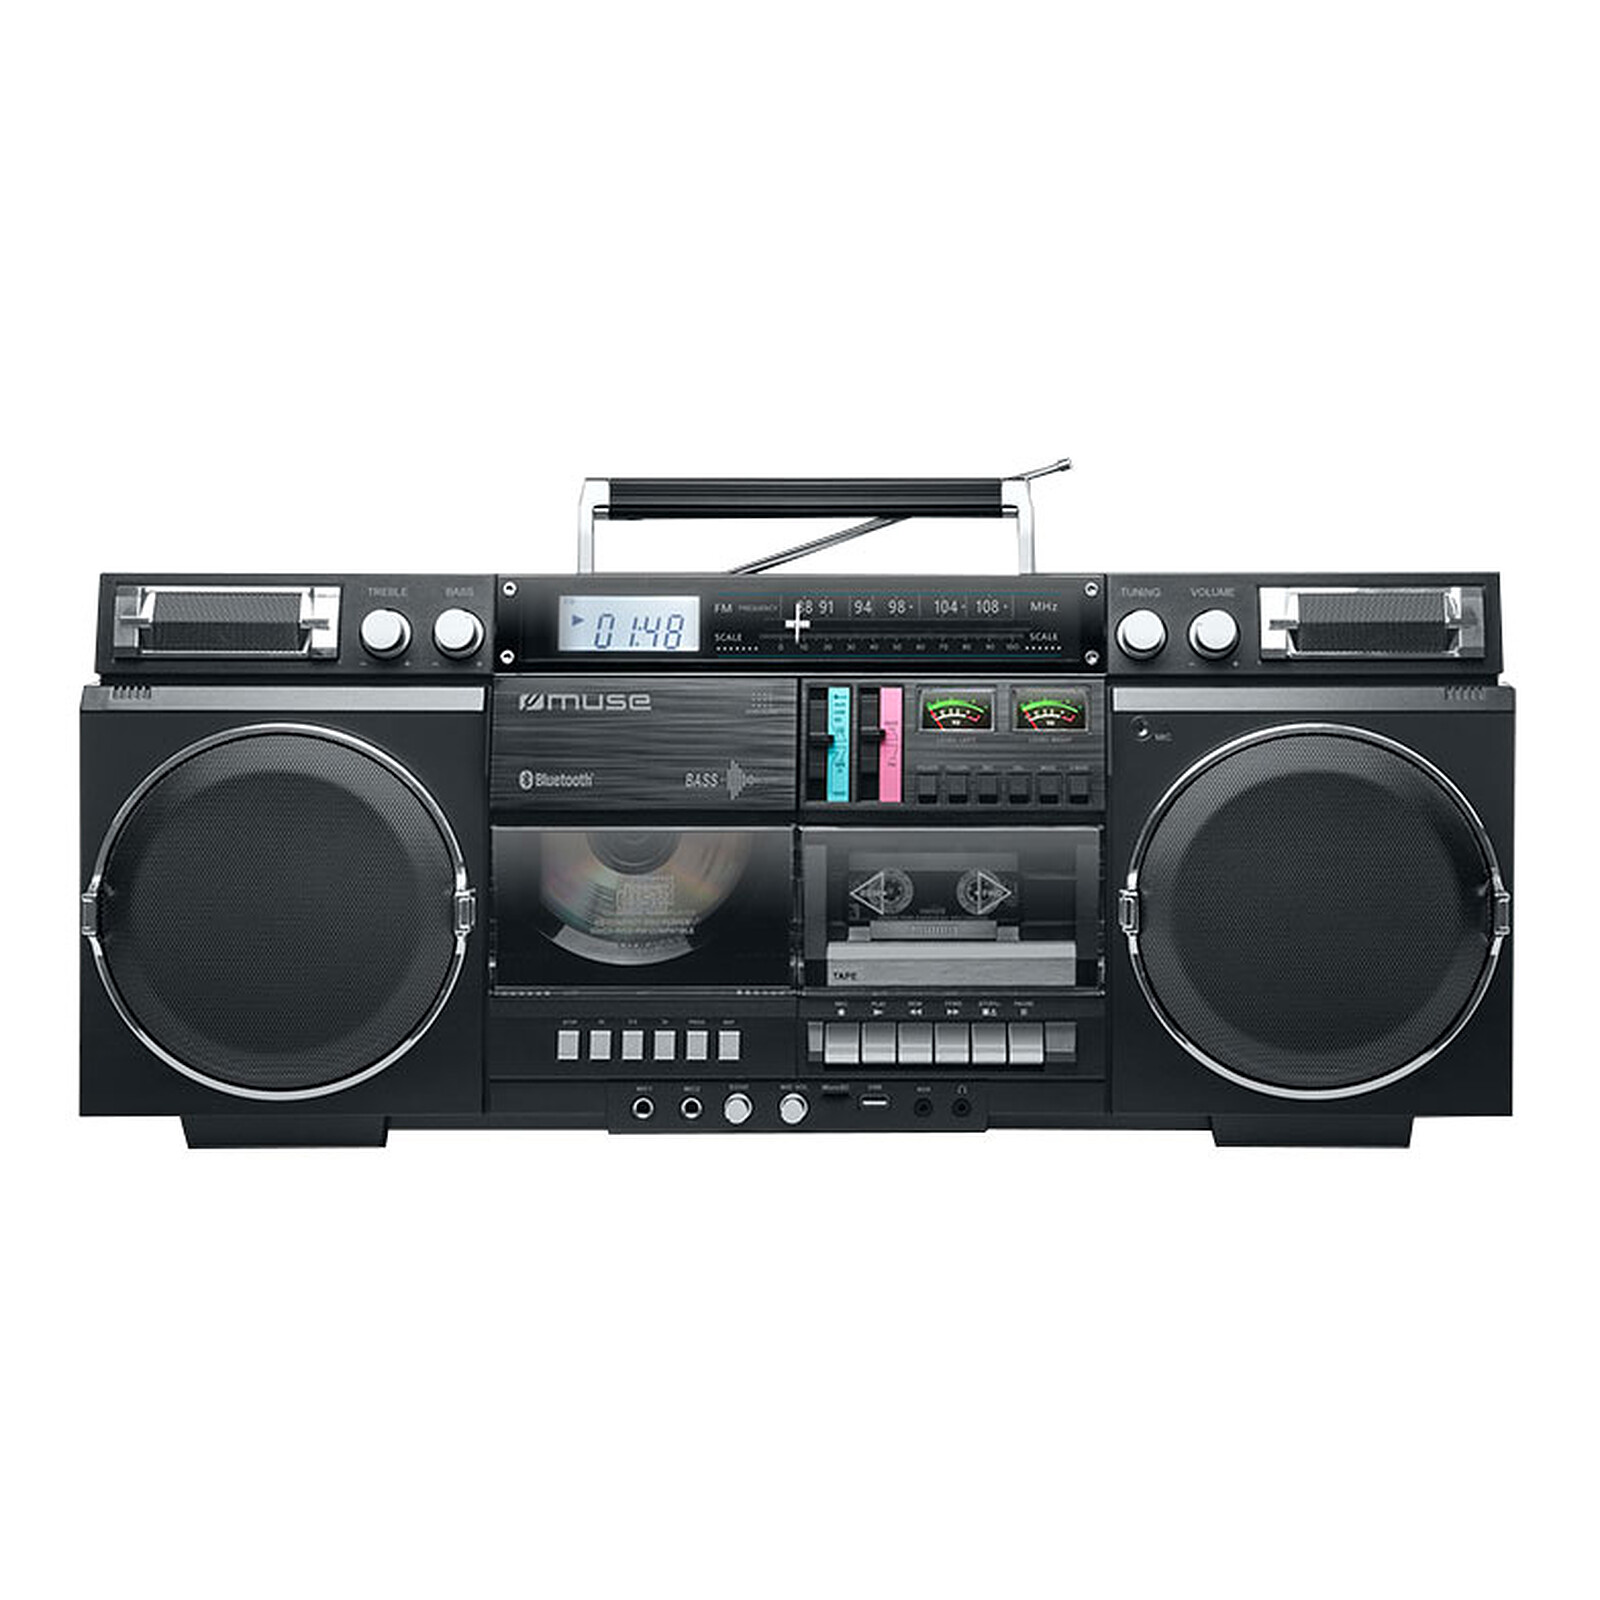 Muse M-380 GB - Radio & radio réveil - Garantie 3 ans LDLC